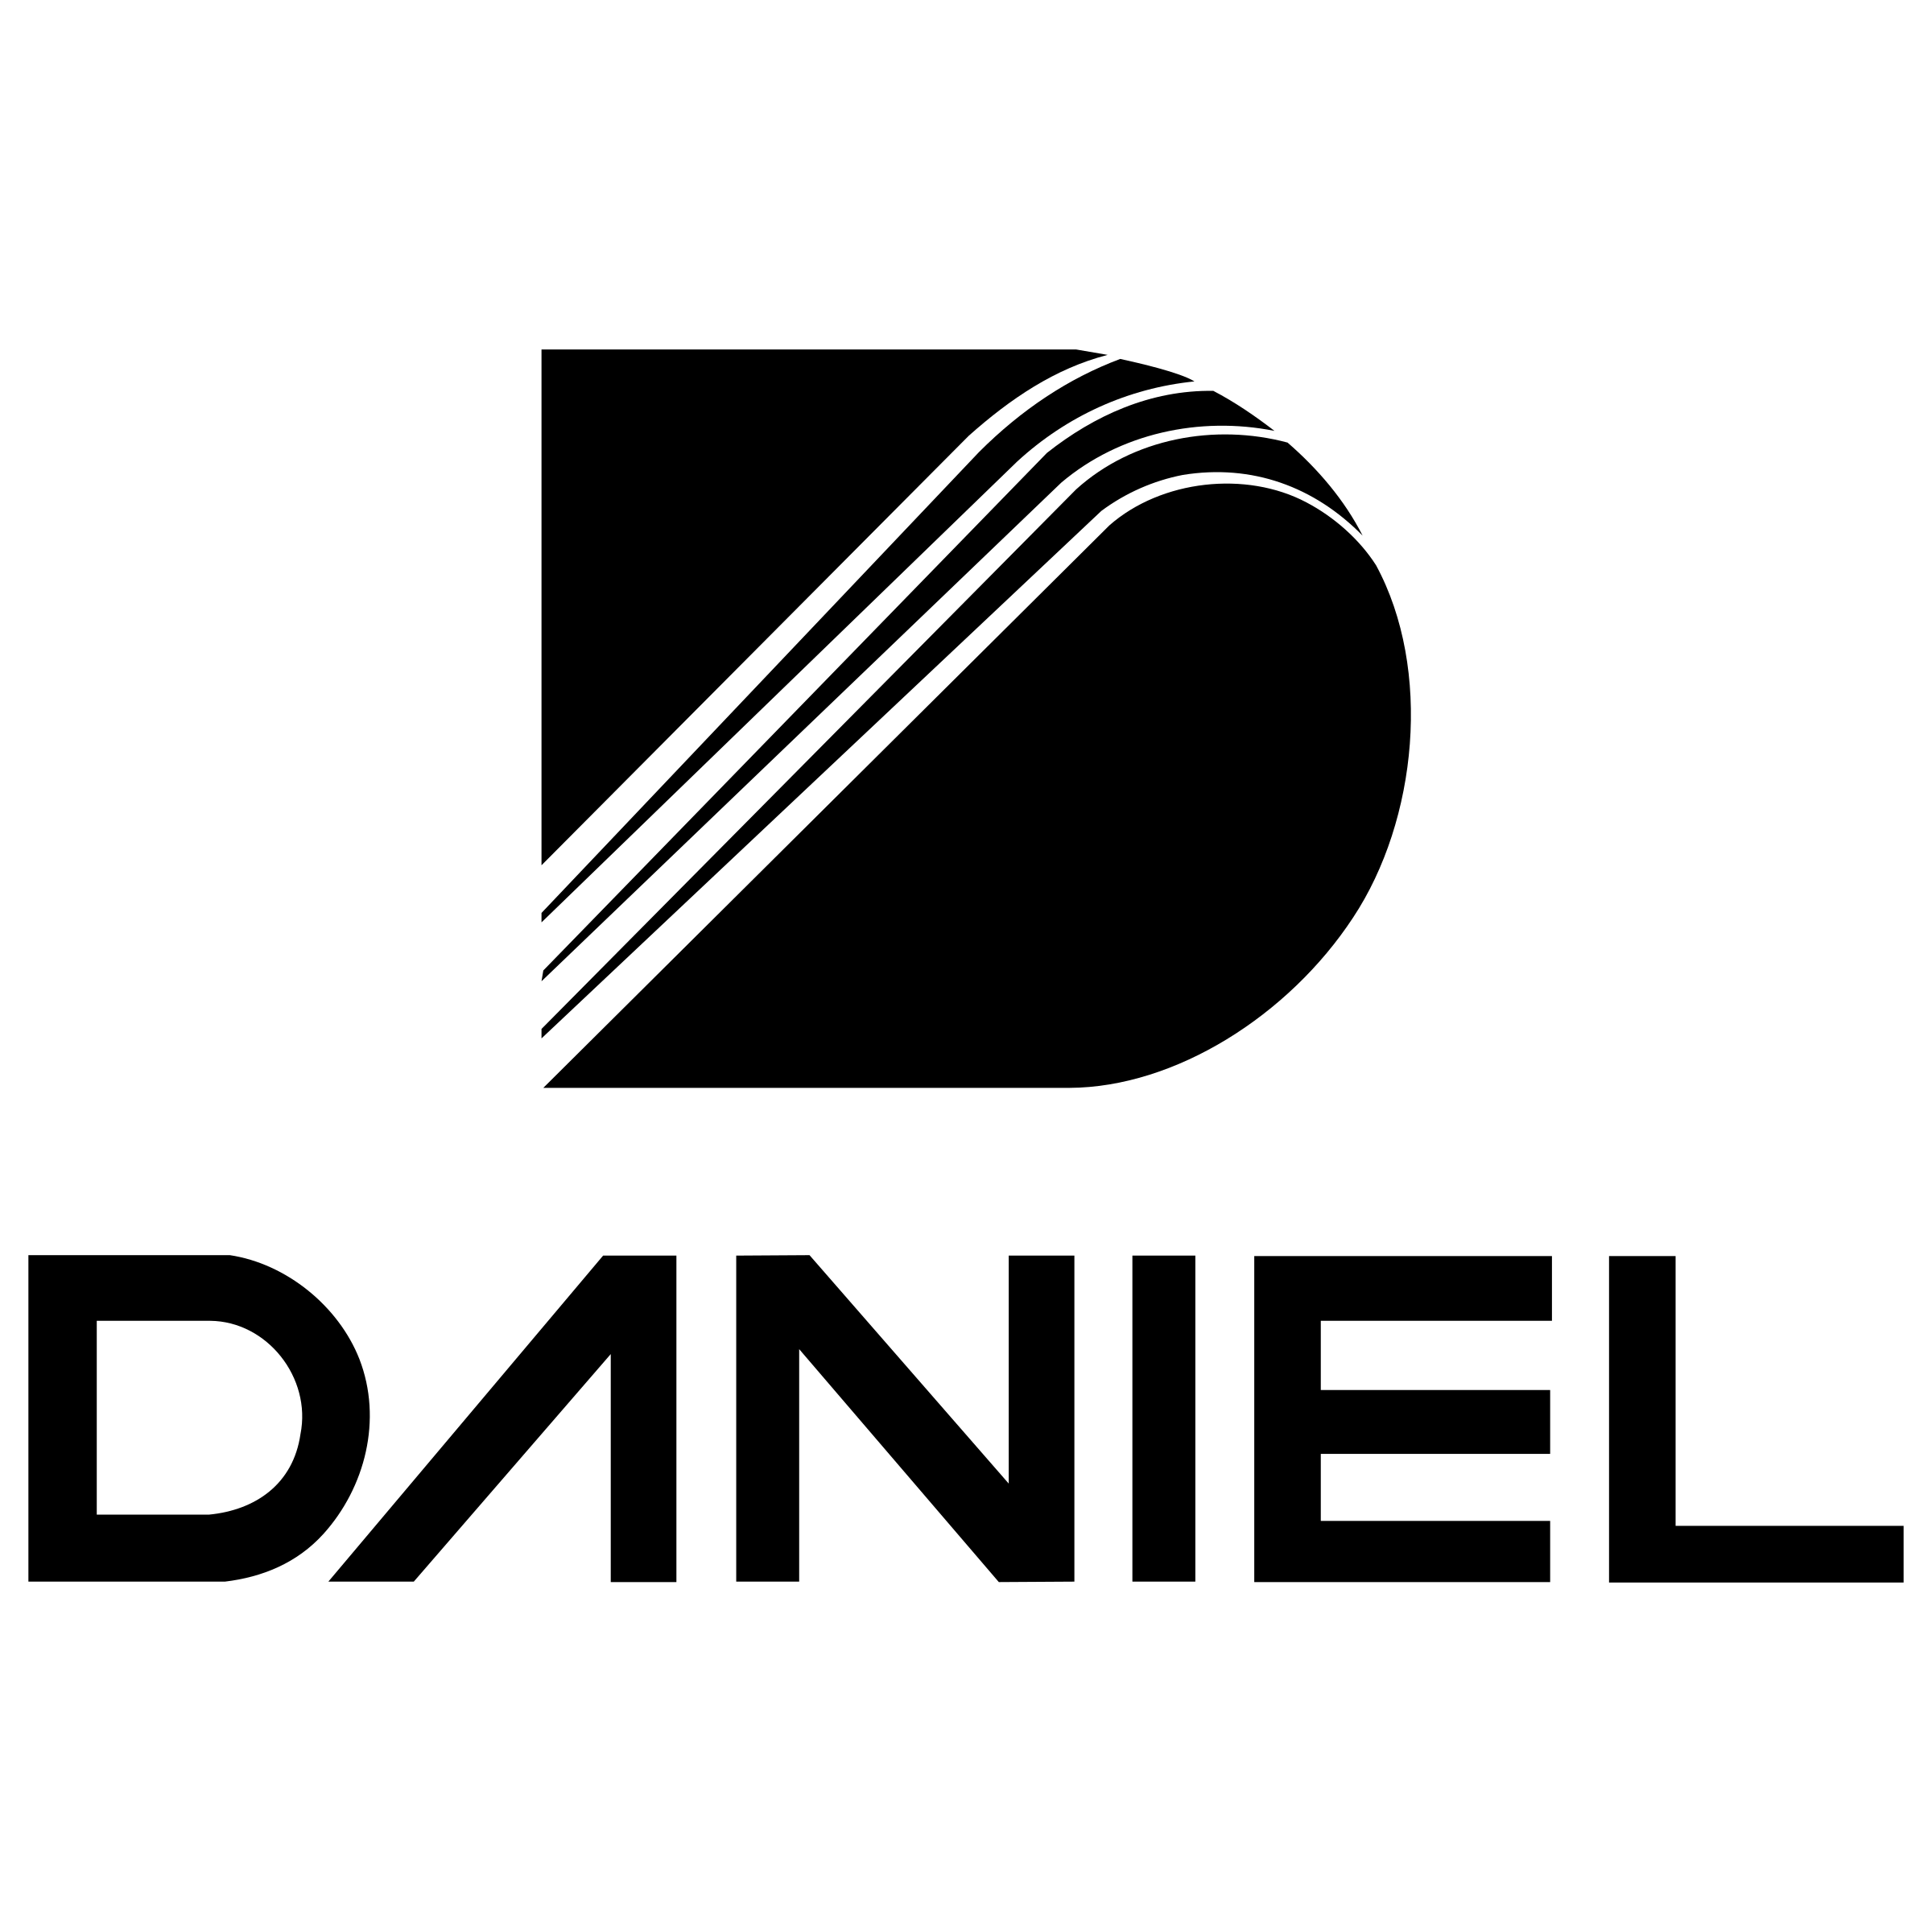 Daniel Logo - Daniel Logo PNG Transparent & SVG Vector - Freebie Supply